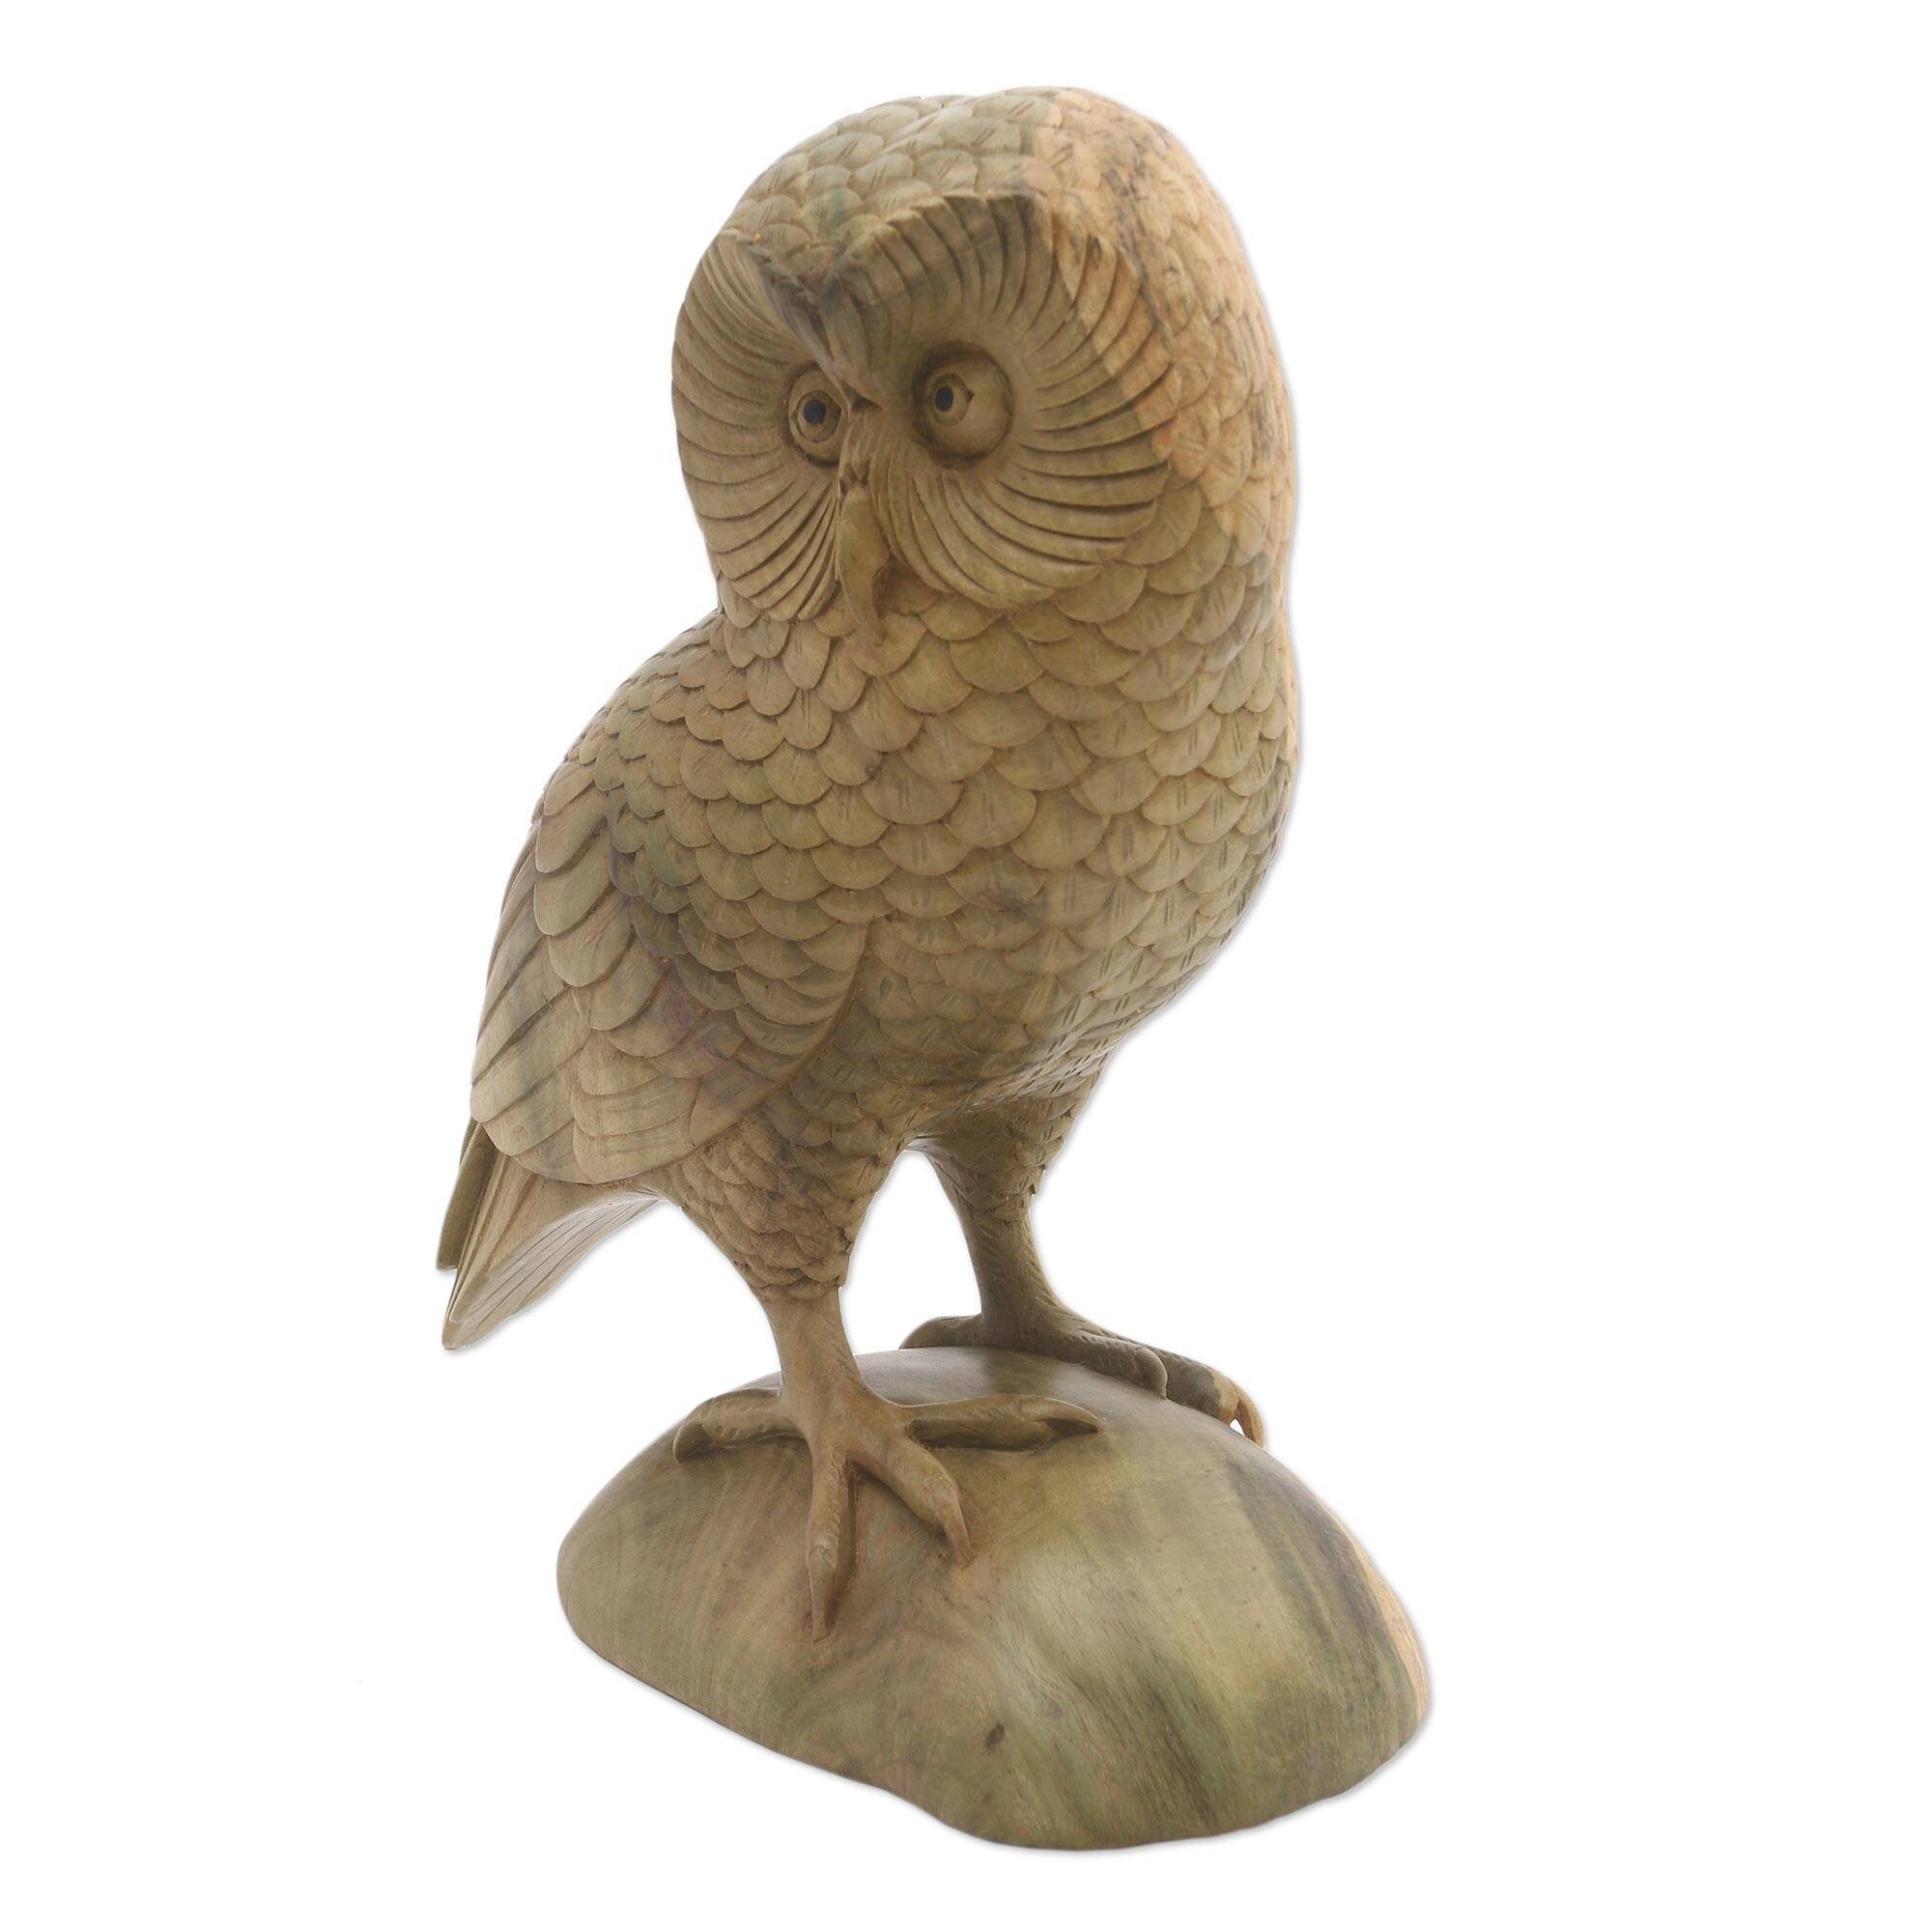 Handmade Intelligent Owl Wood Sculpture (Indonesia) - 12.25" H x 9" W x 4.7" D